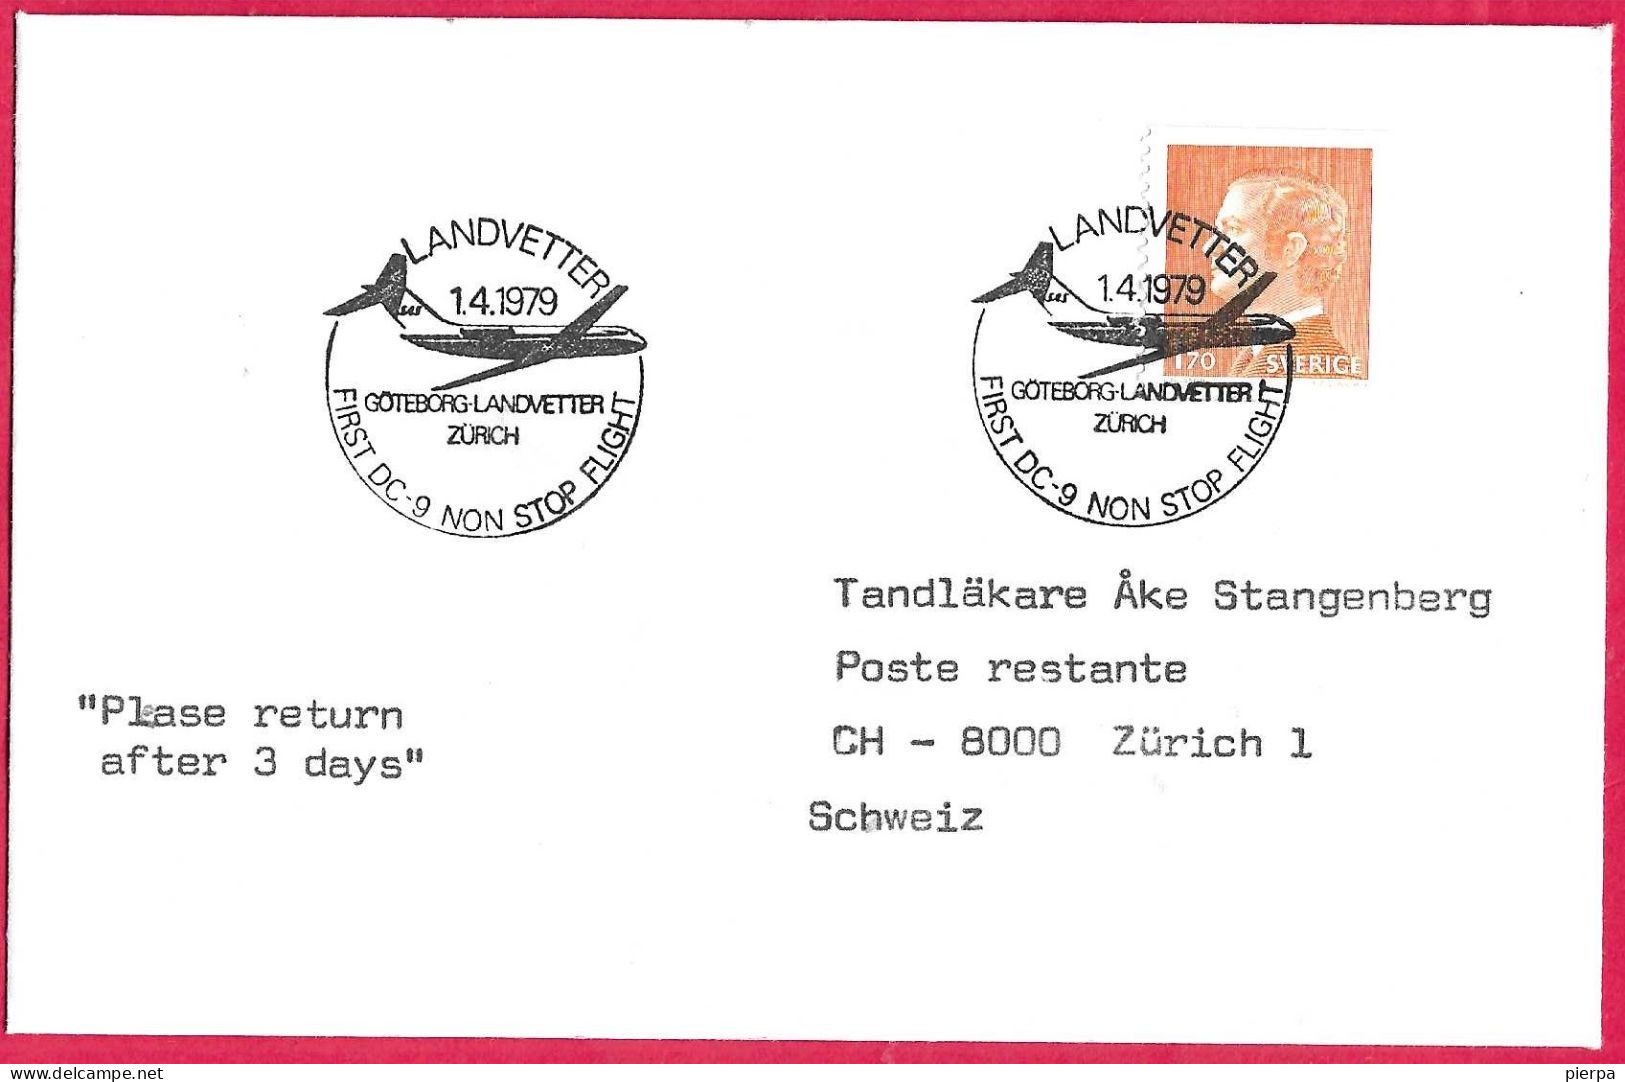 SVERIGE - FIRST DC-9 NON STOP FLIGHT FROM GOTEBORG TO ZURICH * 1.4.1979* ON OFFICIAL ENVELOPE - Briefe U. Dokumente